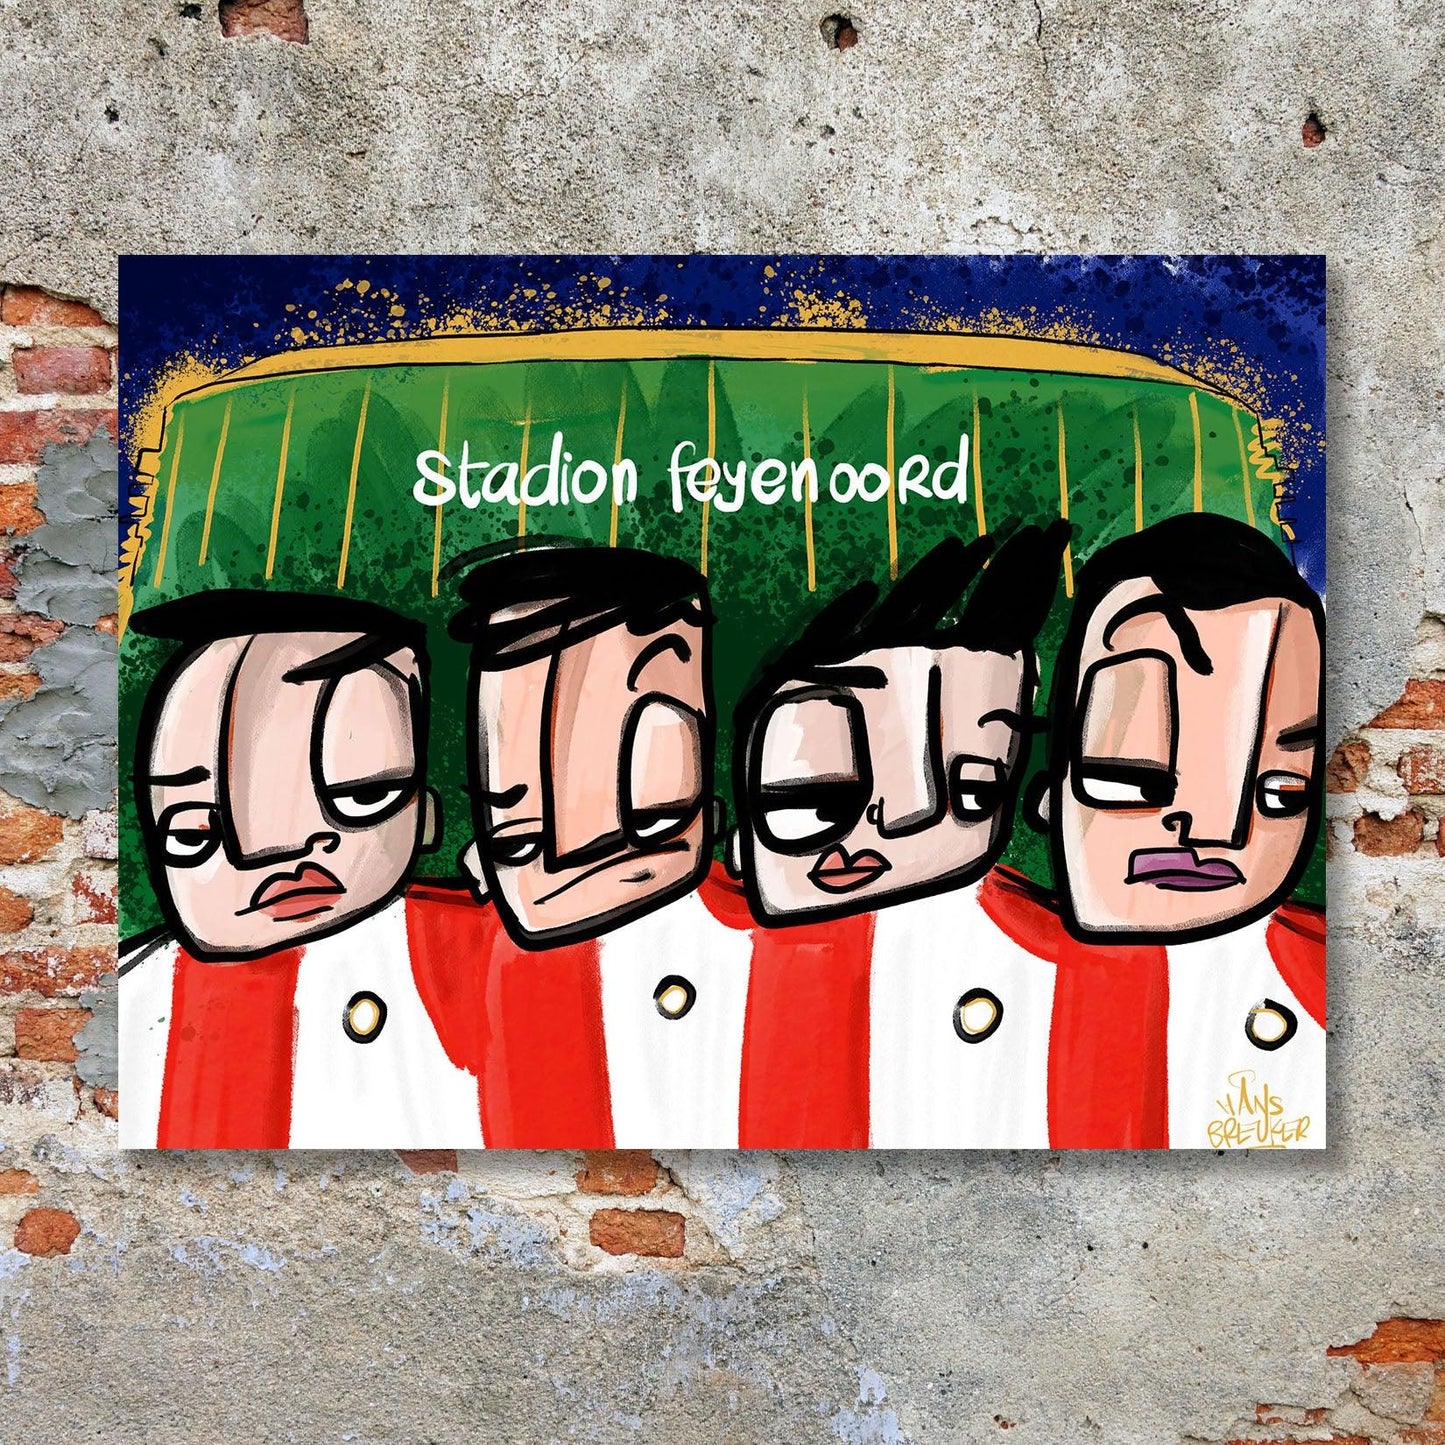 Stadion Feyenoord, De kuip - Hans Breuker